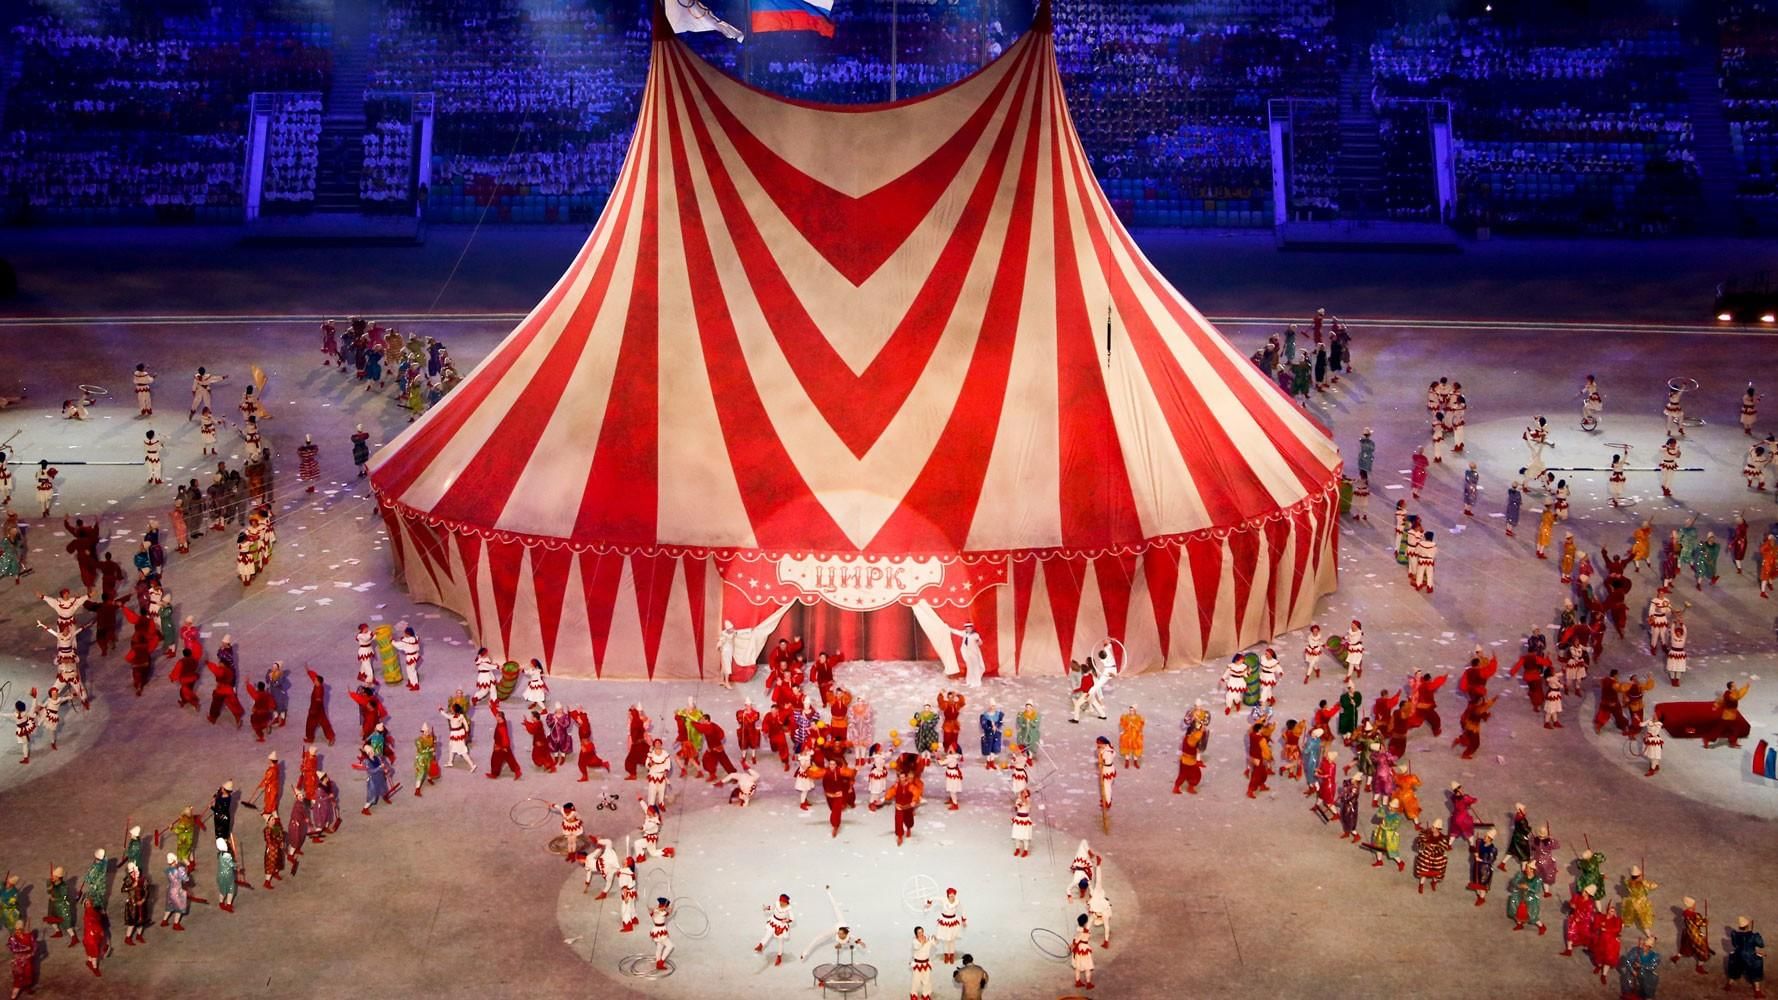 Цирк “Circus World” в Шанхае